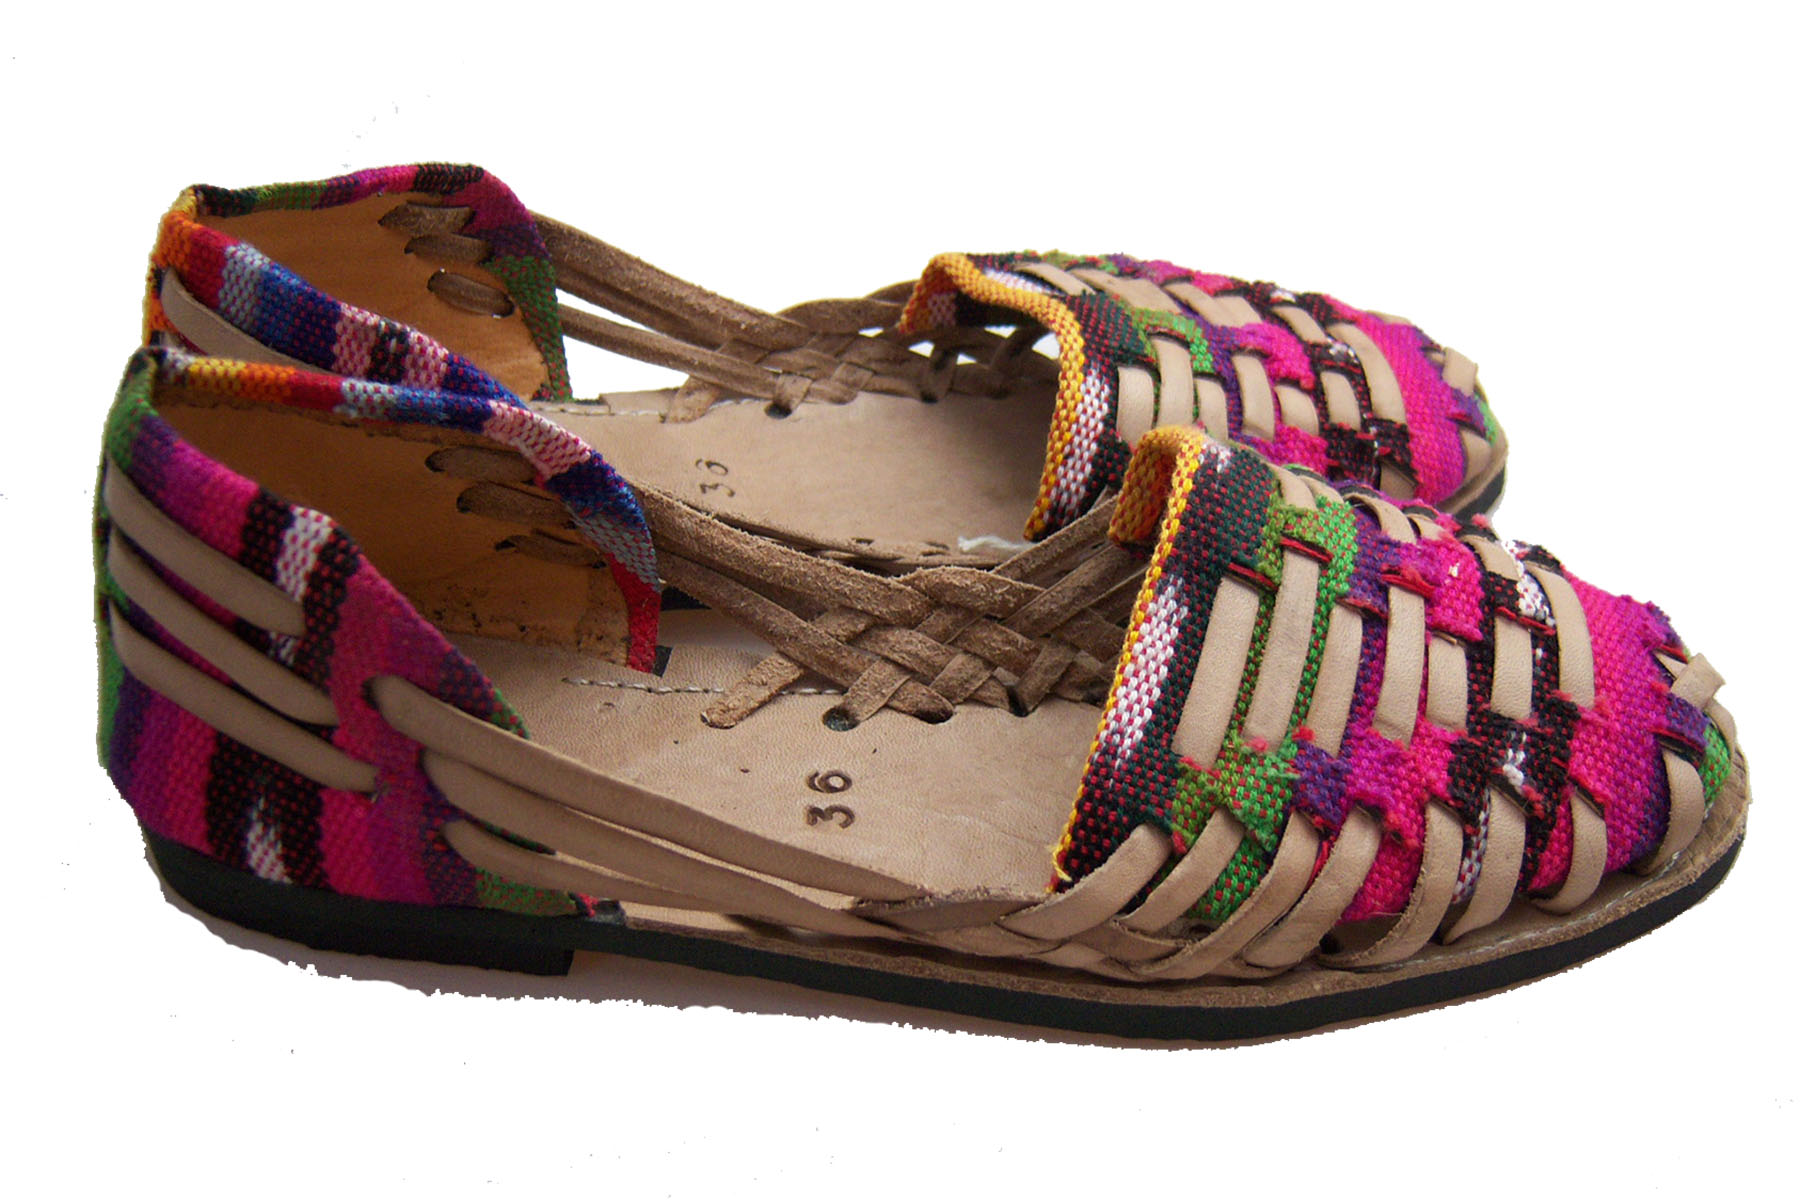 original huarache sandals